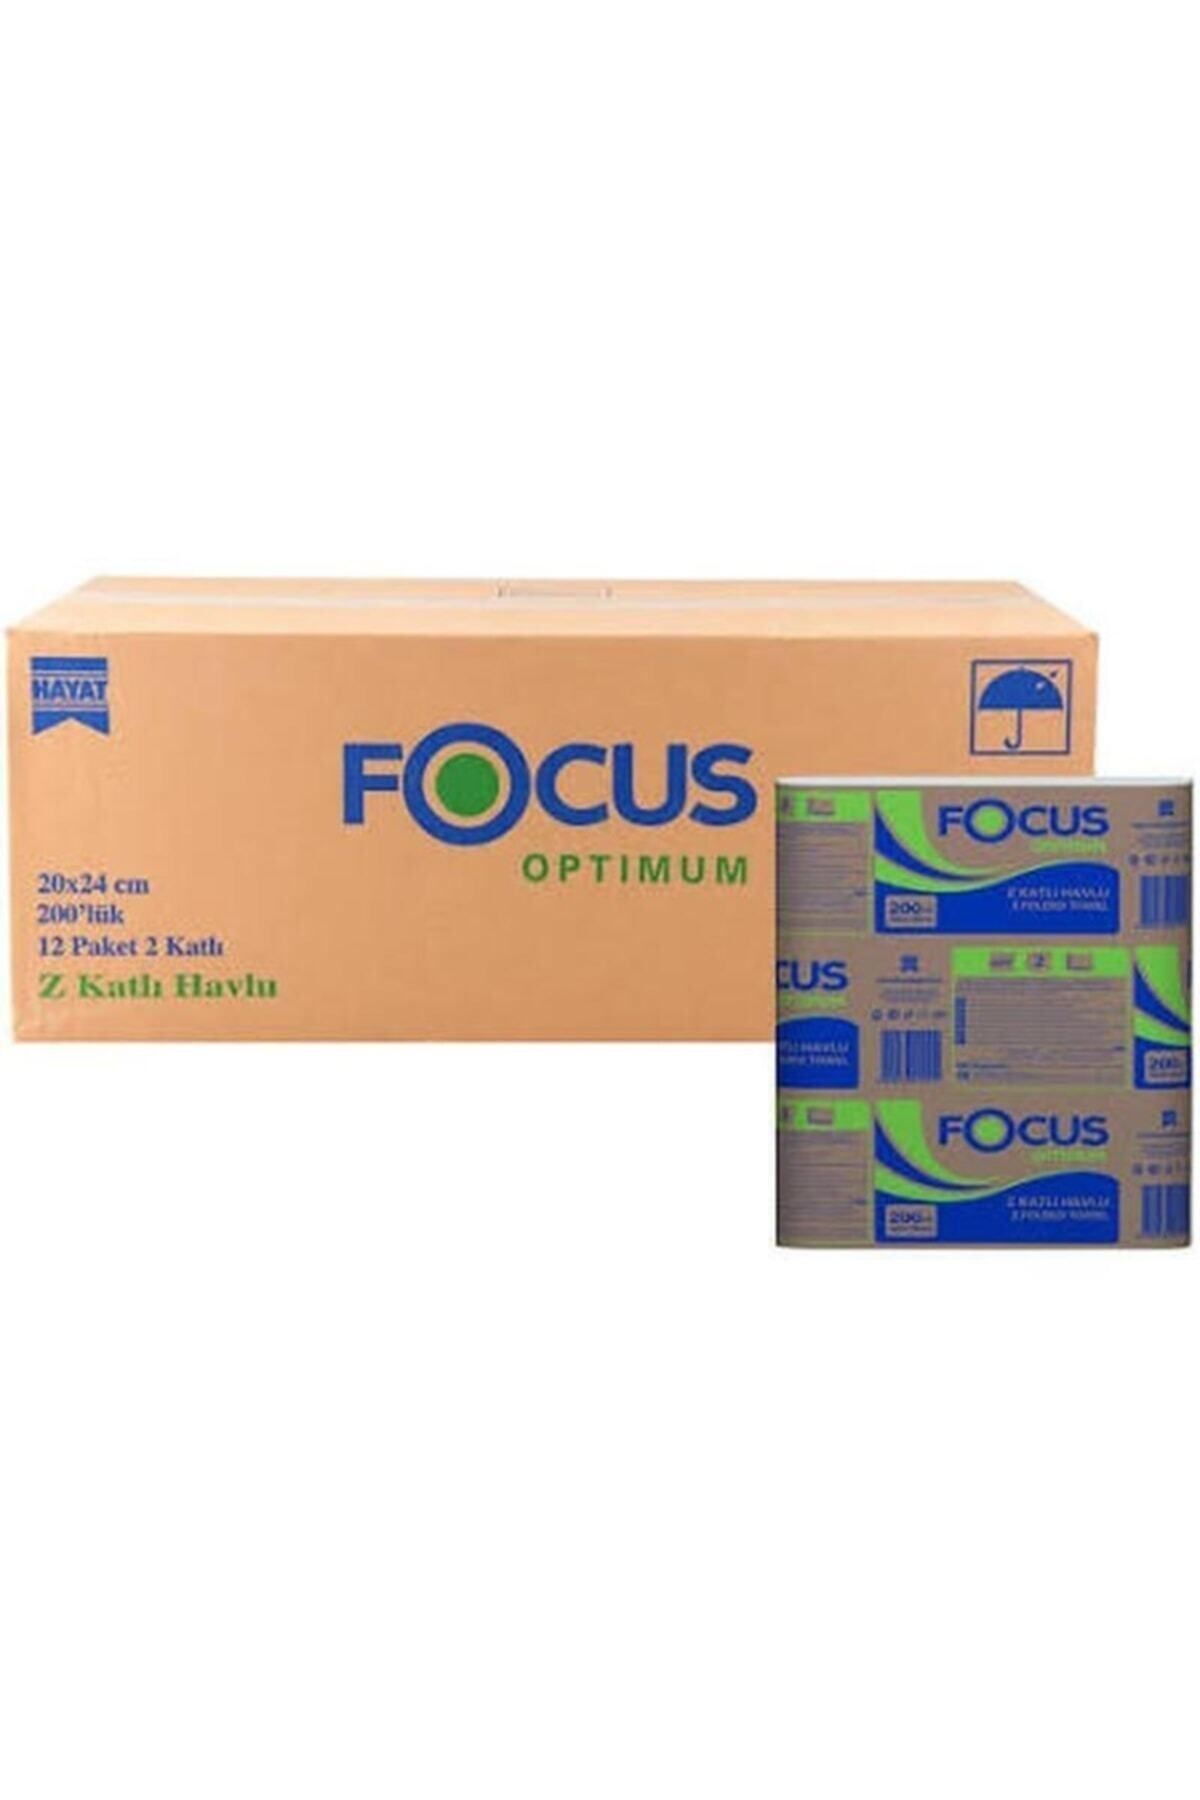 Focus Optimum Z Katlı Havlu Peçete 12x200 Paket 2 Katlı